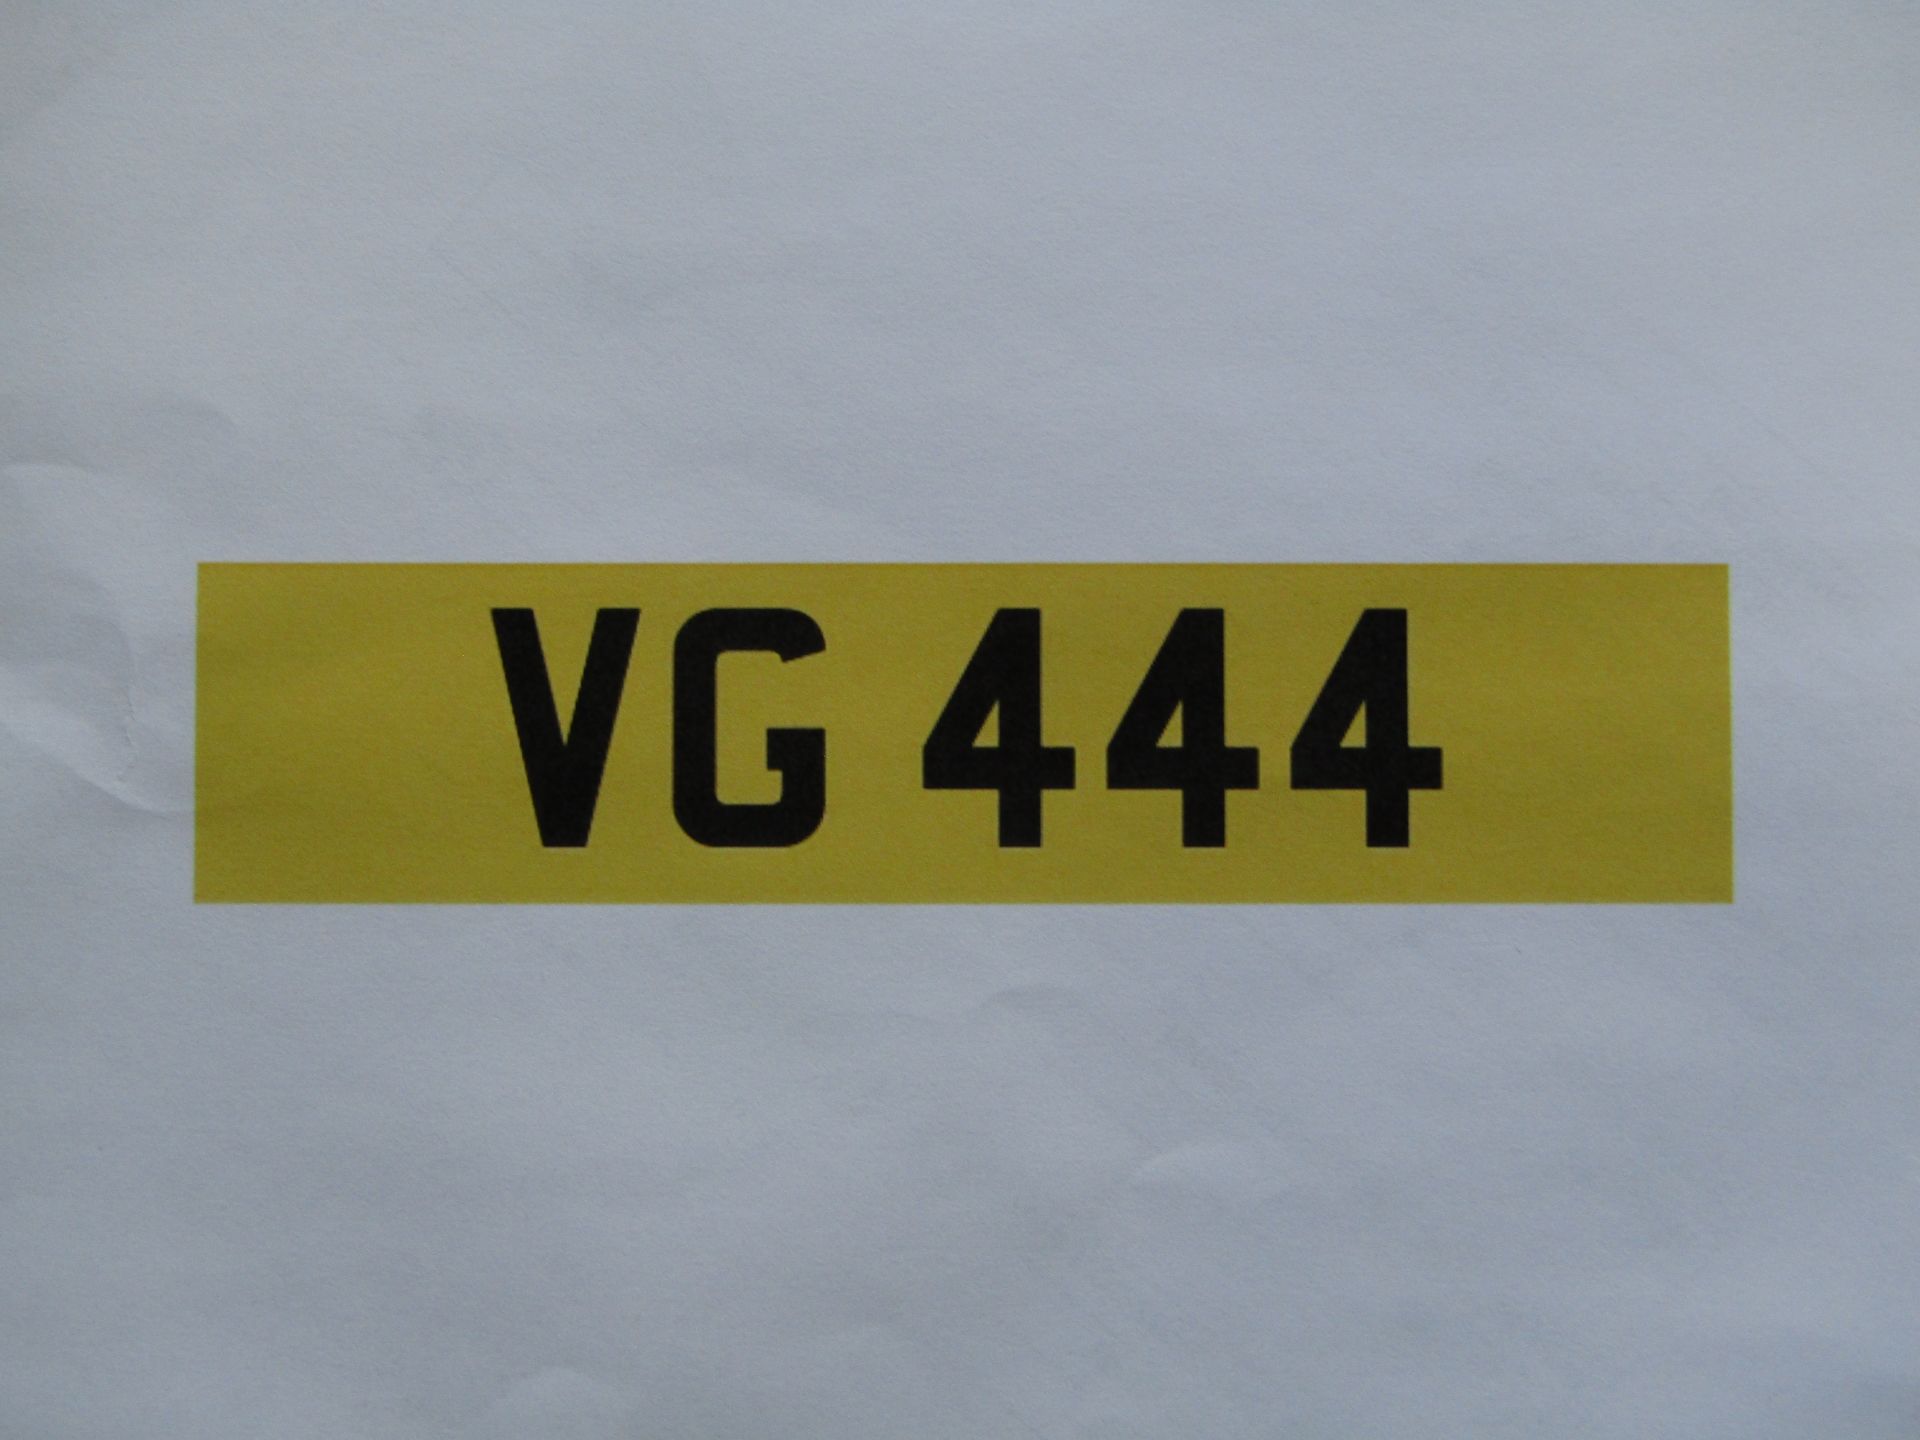 Cherished Registration Number VG 444 On Retention Certificate